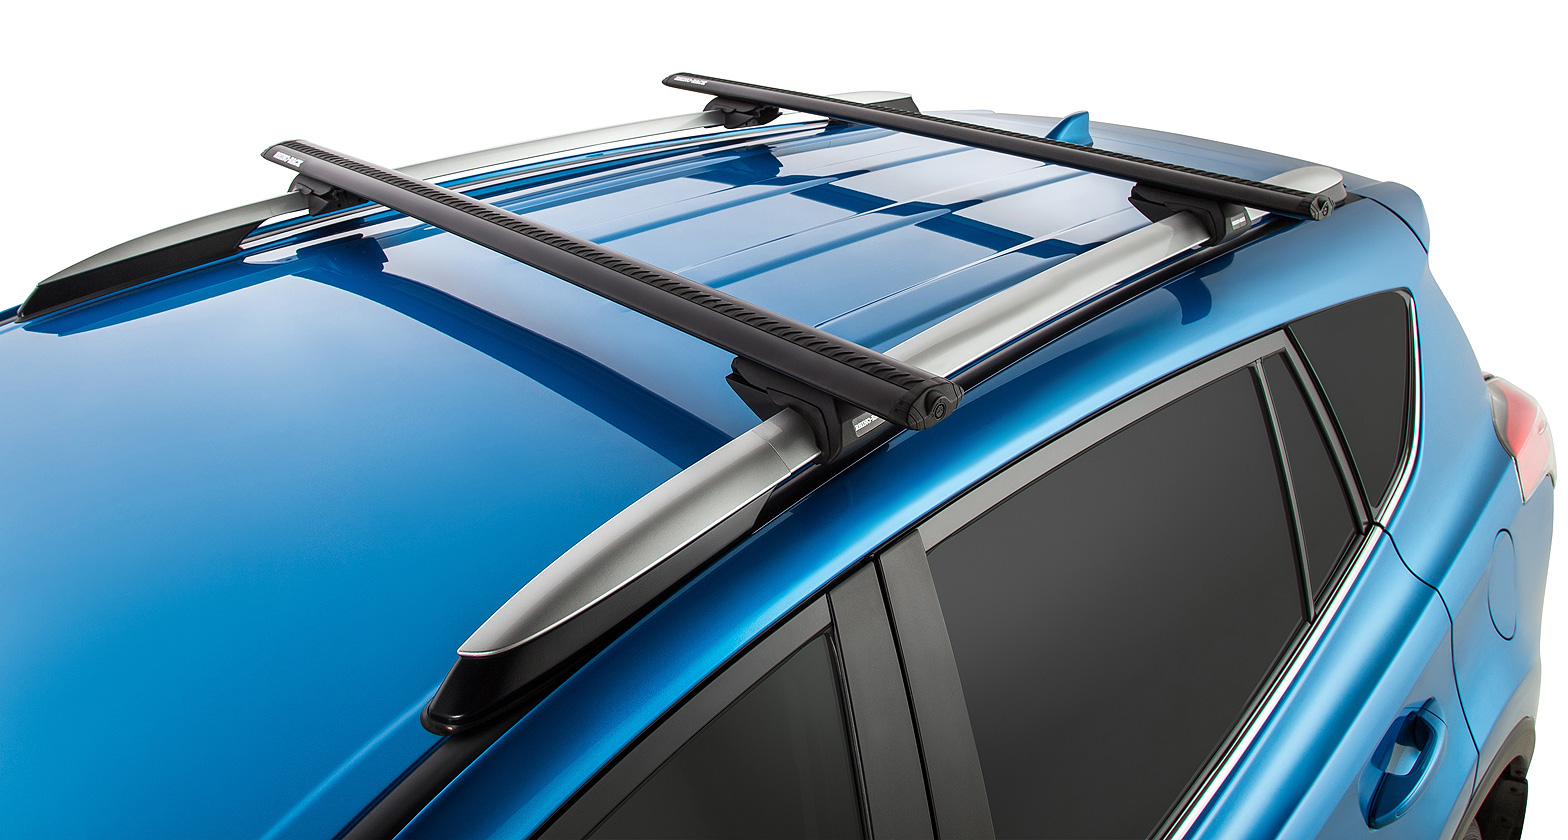 Rhino Rack JA2269 Vortex SX Black 2 Bar Roof Rack for Toyota Rav 4 XA40 5dr SUV with Raised Roof Rail (2013 to 2018) - Raised Rail Mount